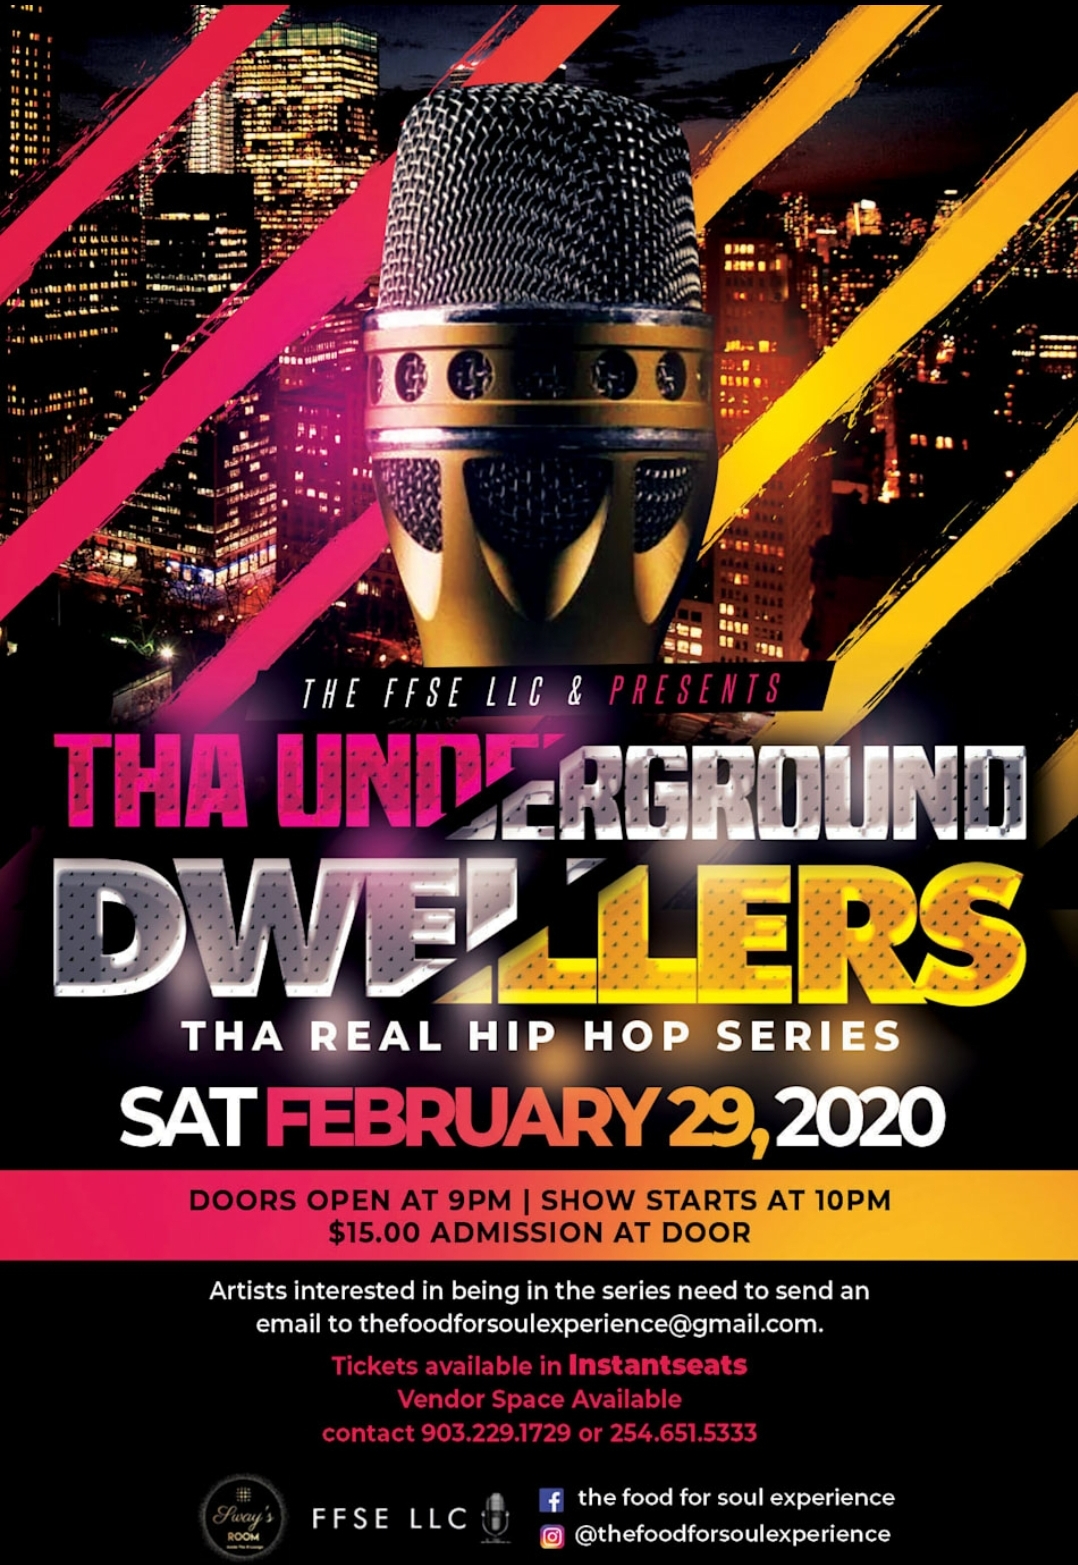 Tha Underground Dwellers - Tha Real Hip Hop Series